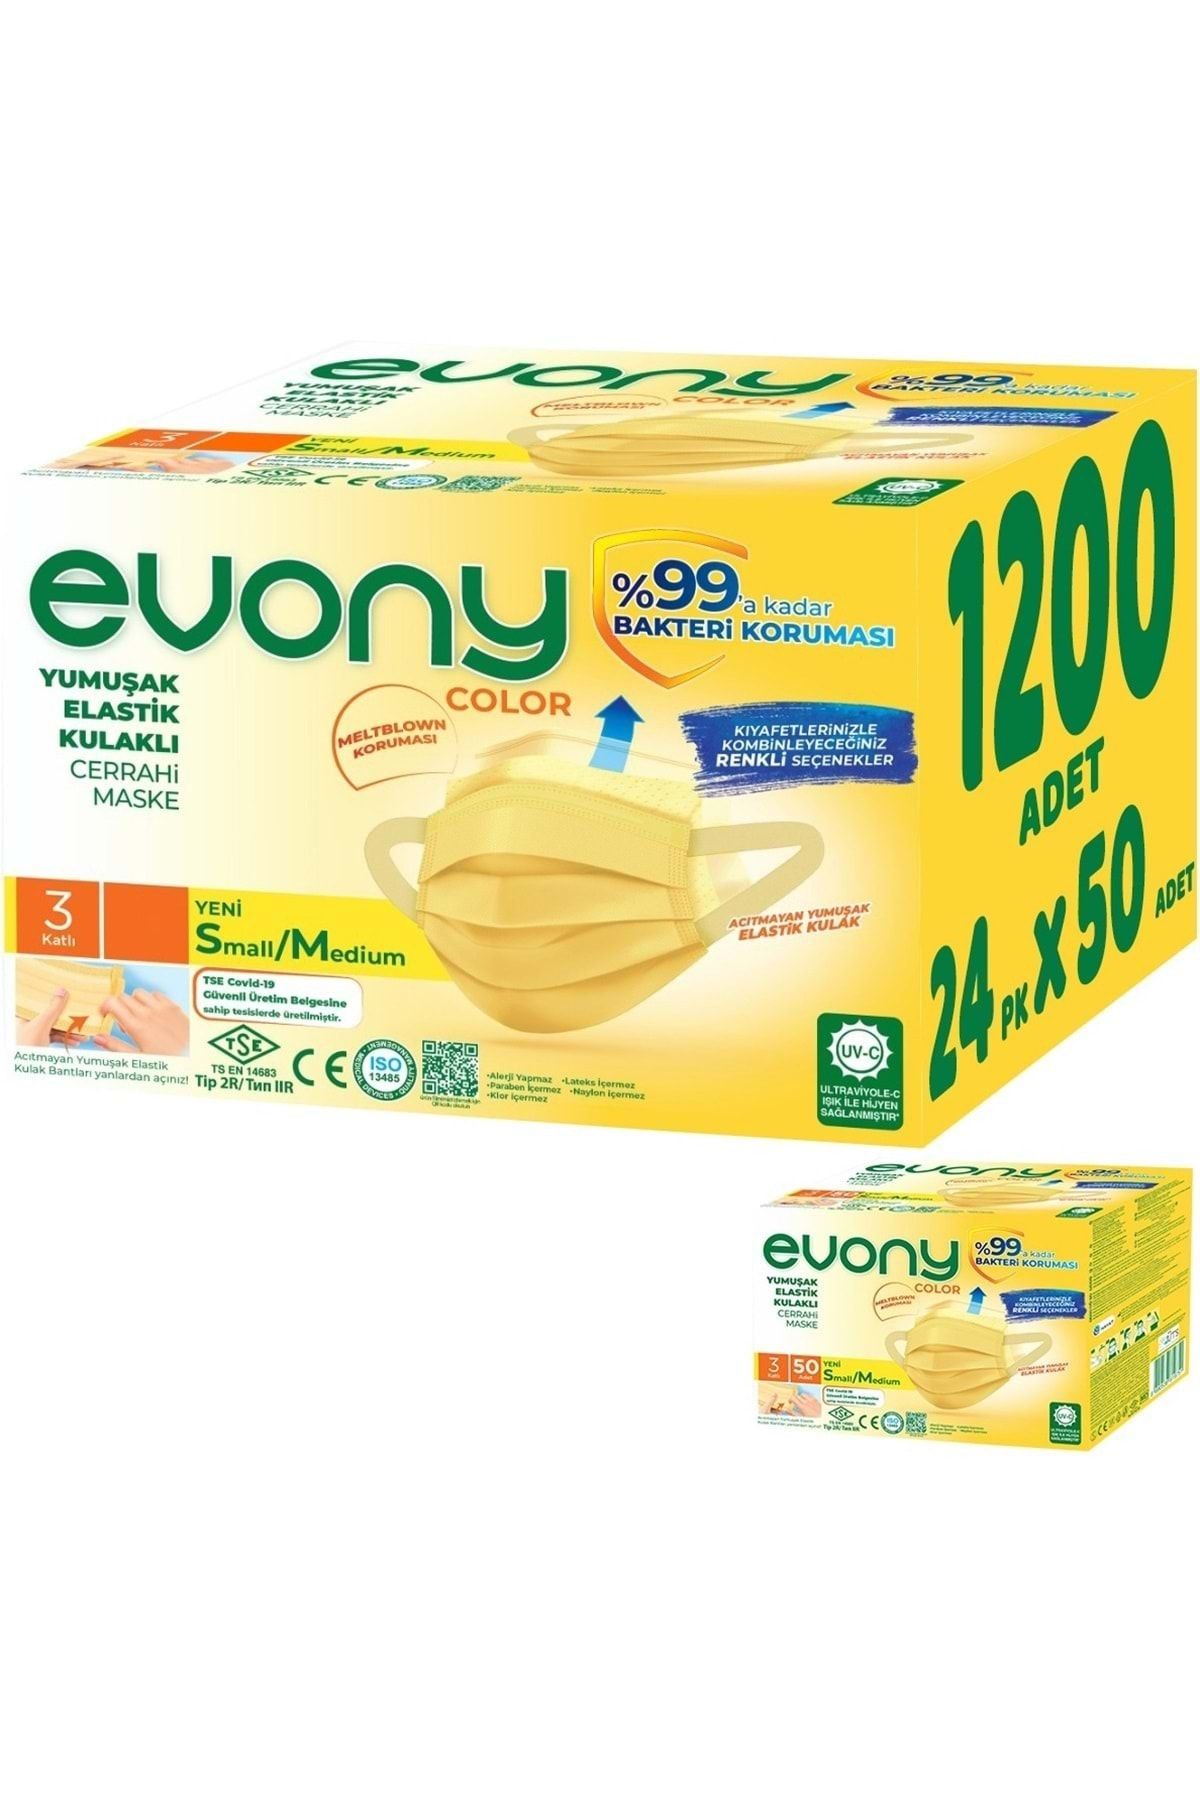 Evony 3 Katlı Filtreli Burun Telli Cerrahi Maske 1200 Lü Set Small/medium Sarı 160*90mm (24pk*50)